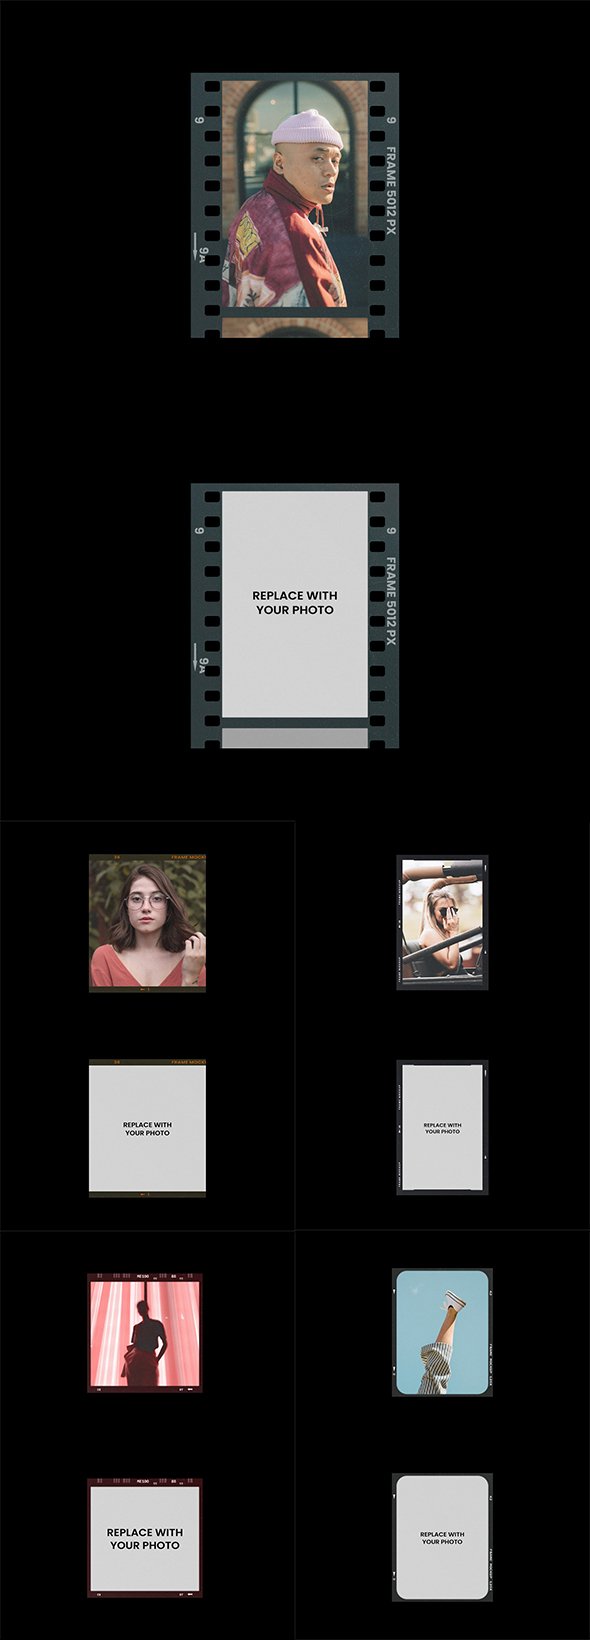 AdobeStock - Analog Film Frame Photo Effect Mockup Template Set 3